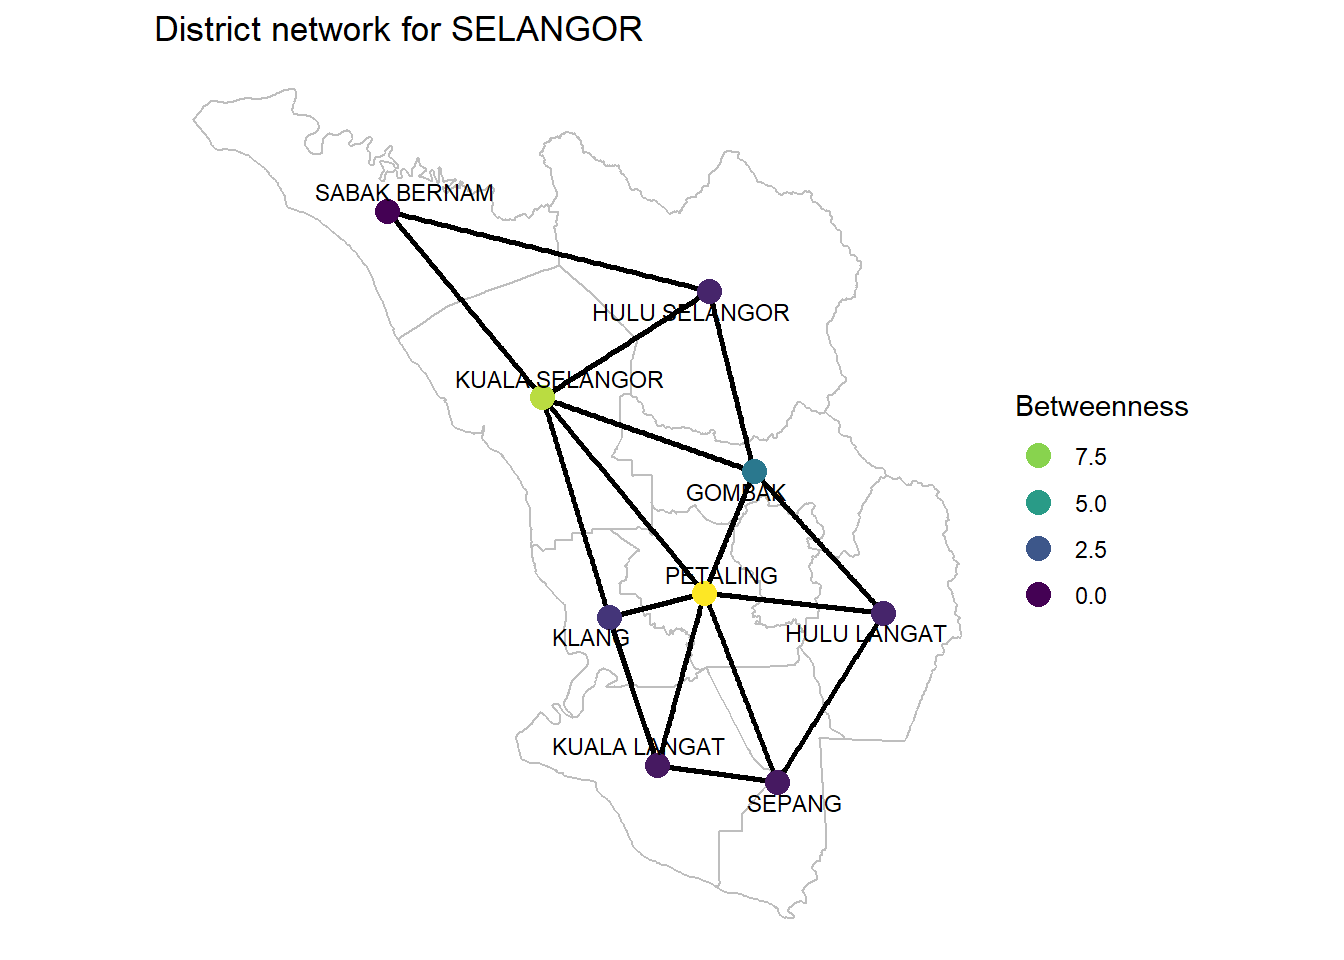 Betweenness of SELANGOR district network